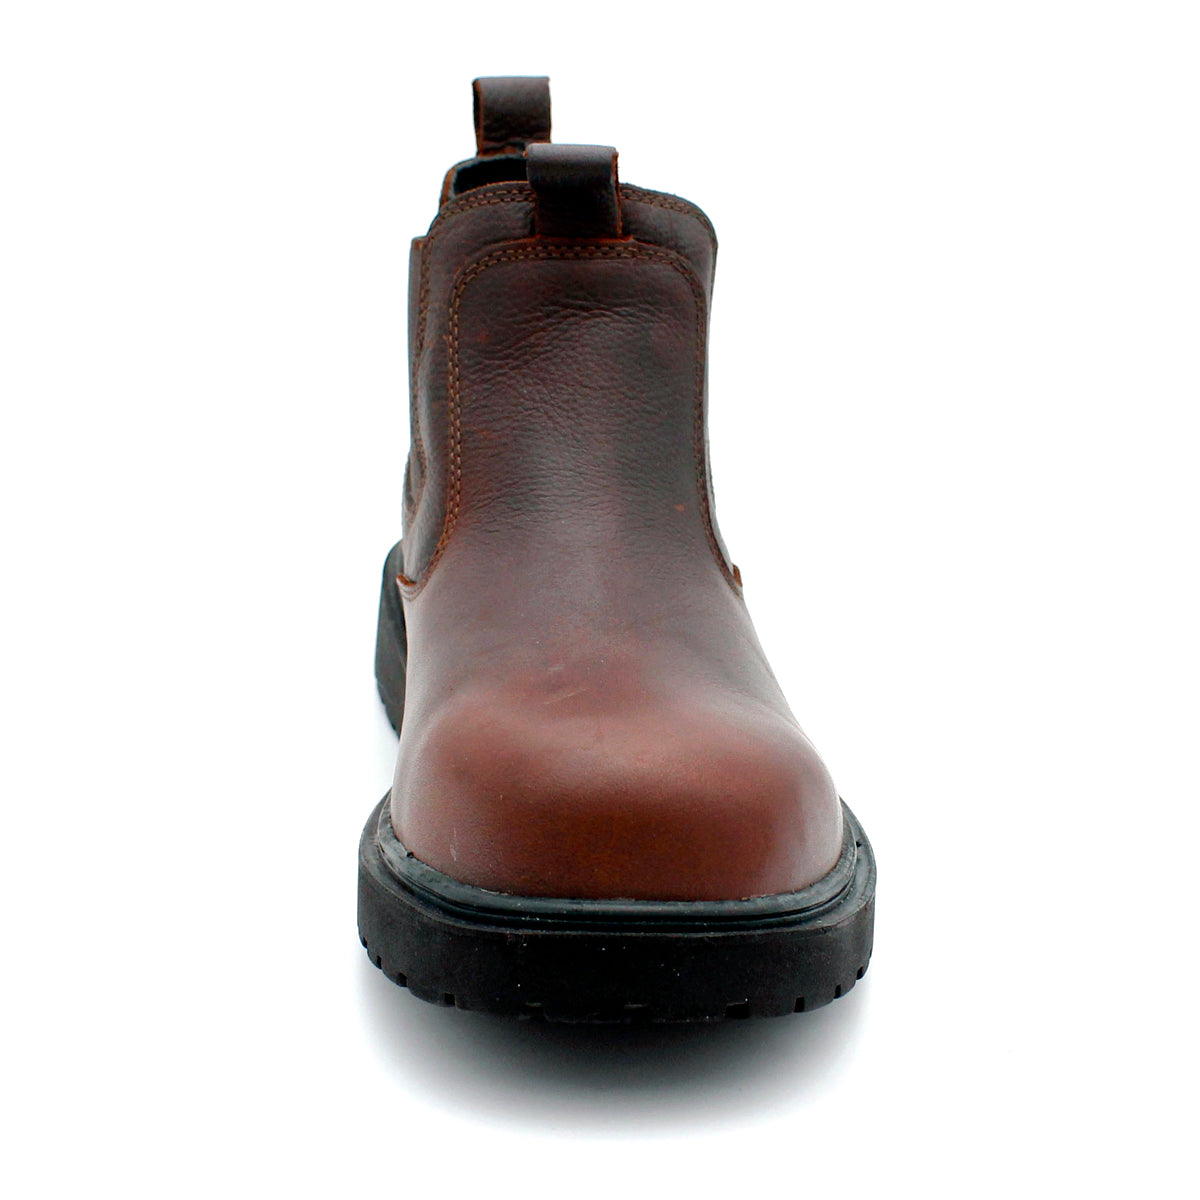 Gordie 9424-25 / Composite Safety Toe